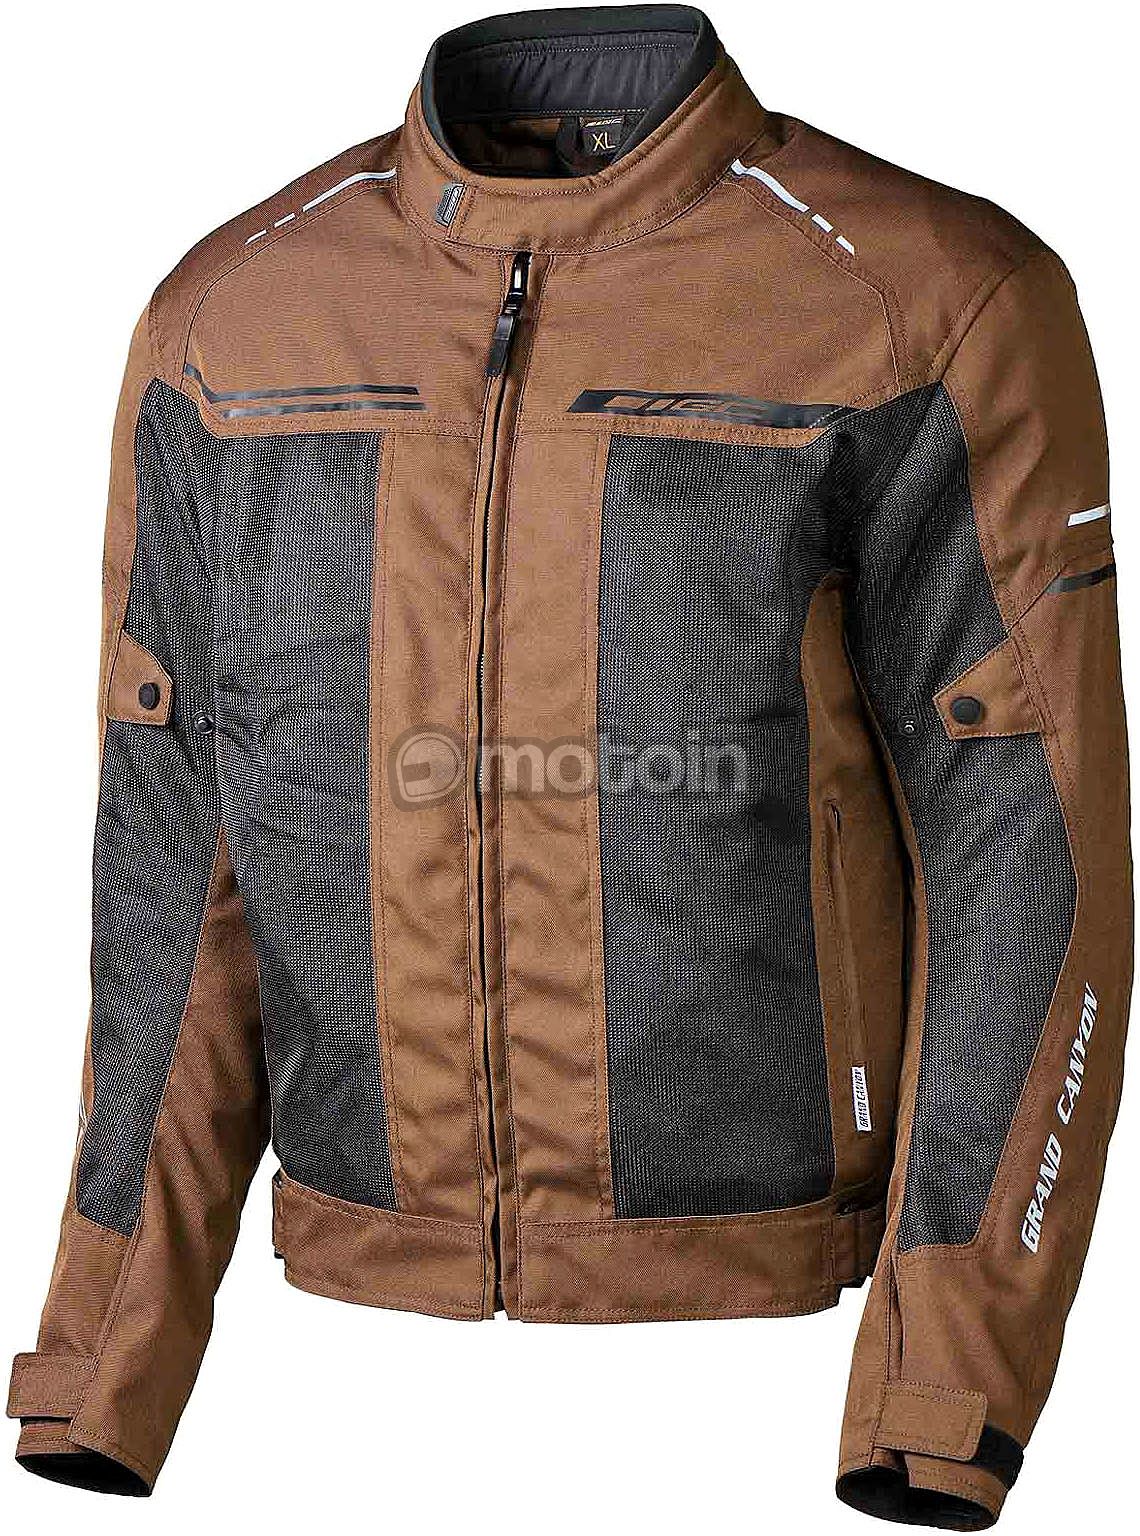 GC Bikewear Luca, textile jacket